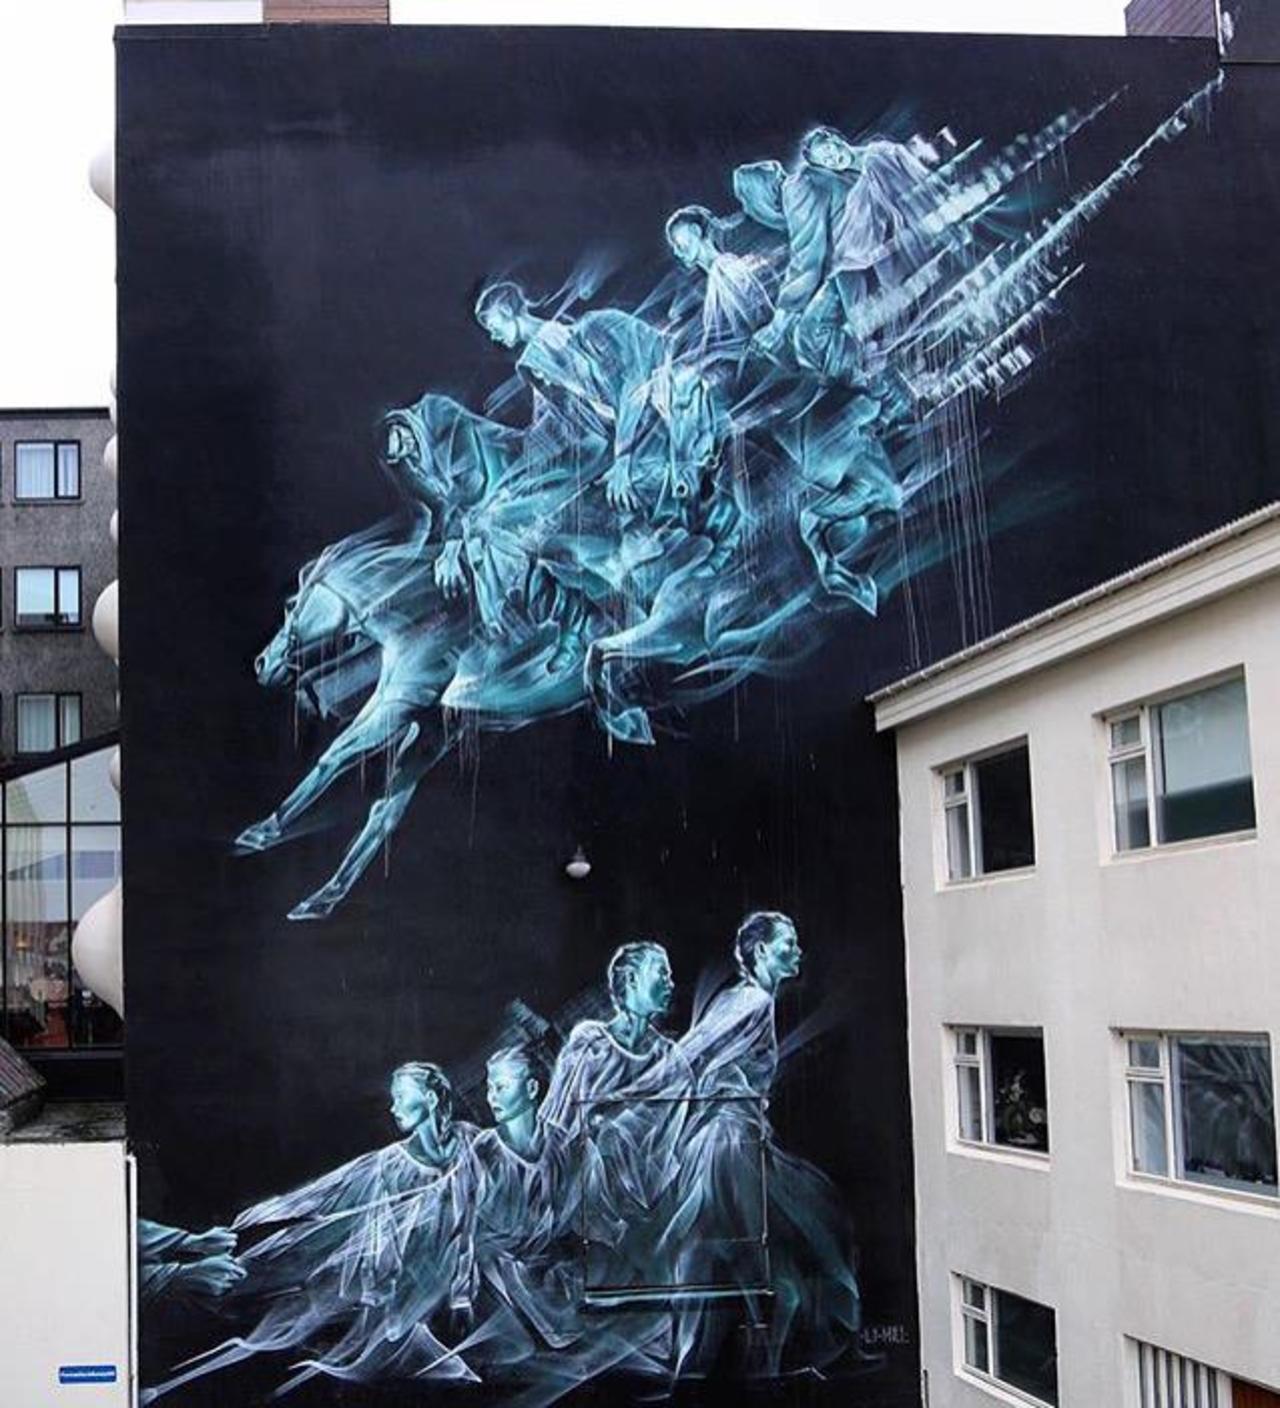 RT @mzajaeh: Street Art by li hill in Reykjavik 

#art #graffiti #mural #streetart http://t.co/L9e9ED7JbN